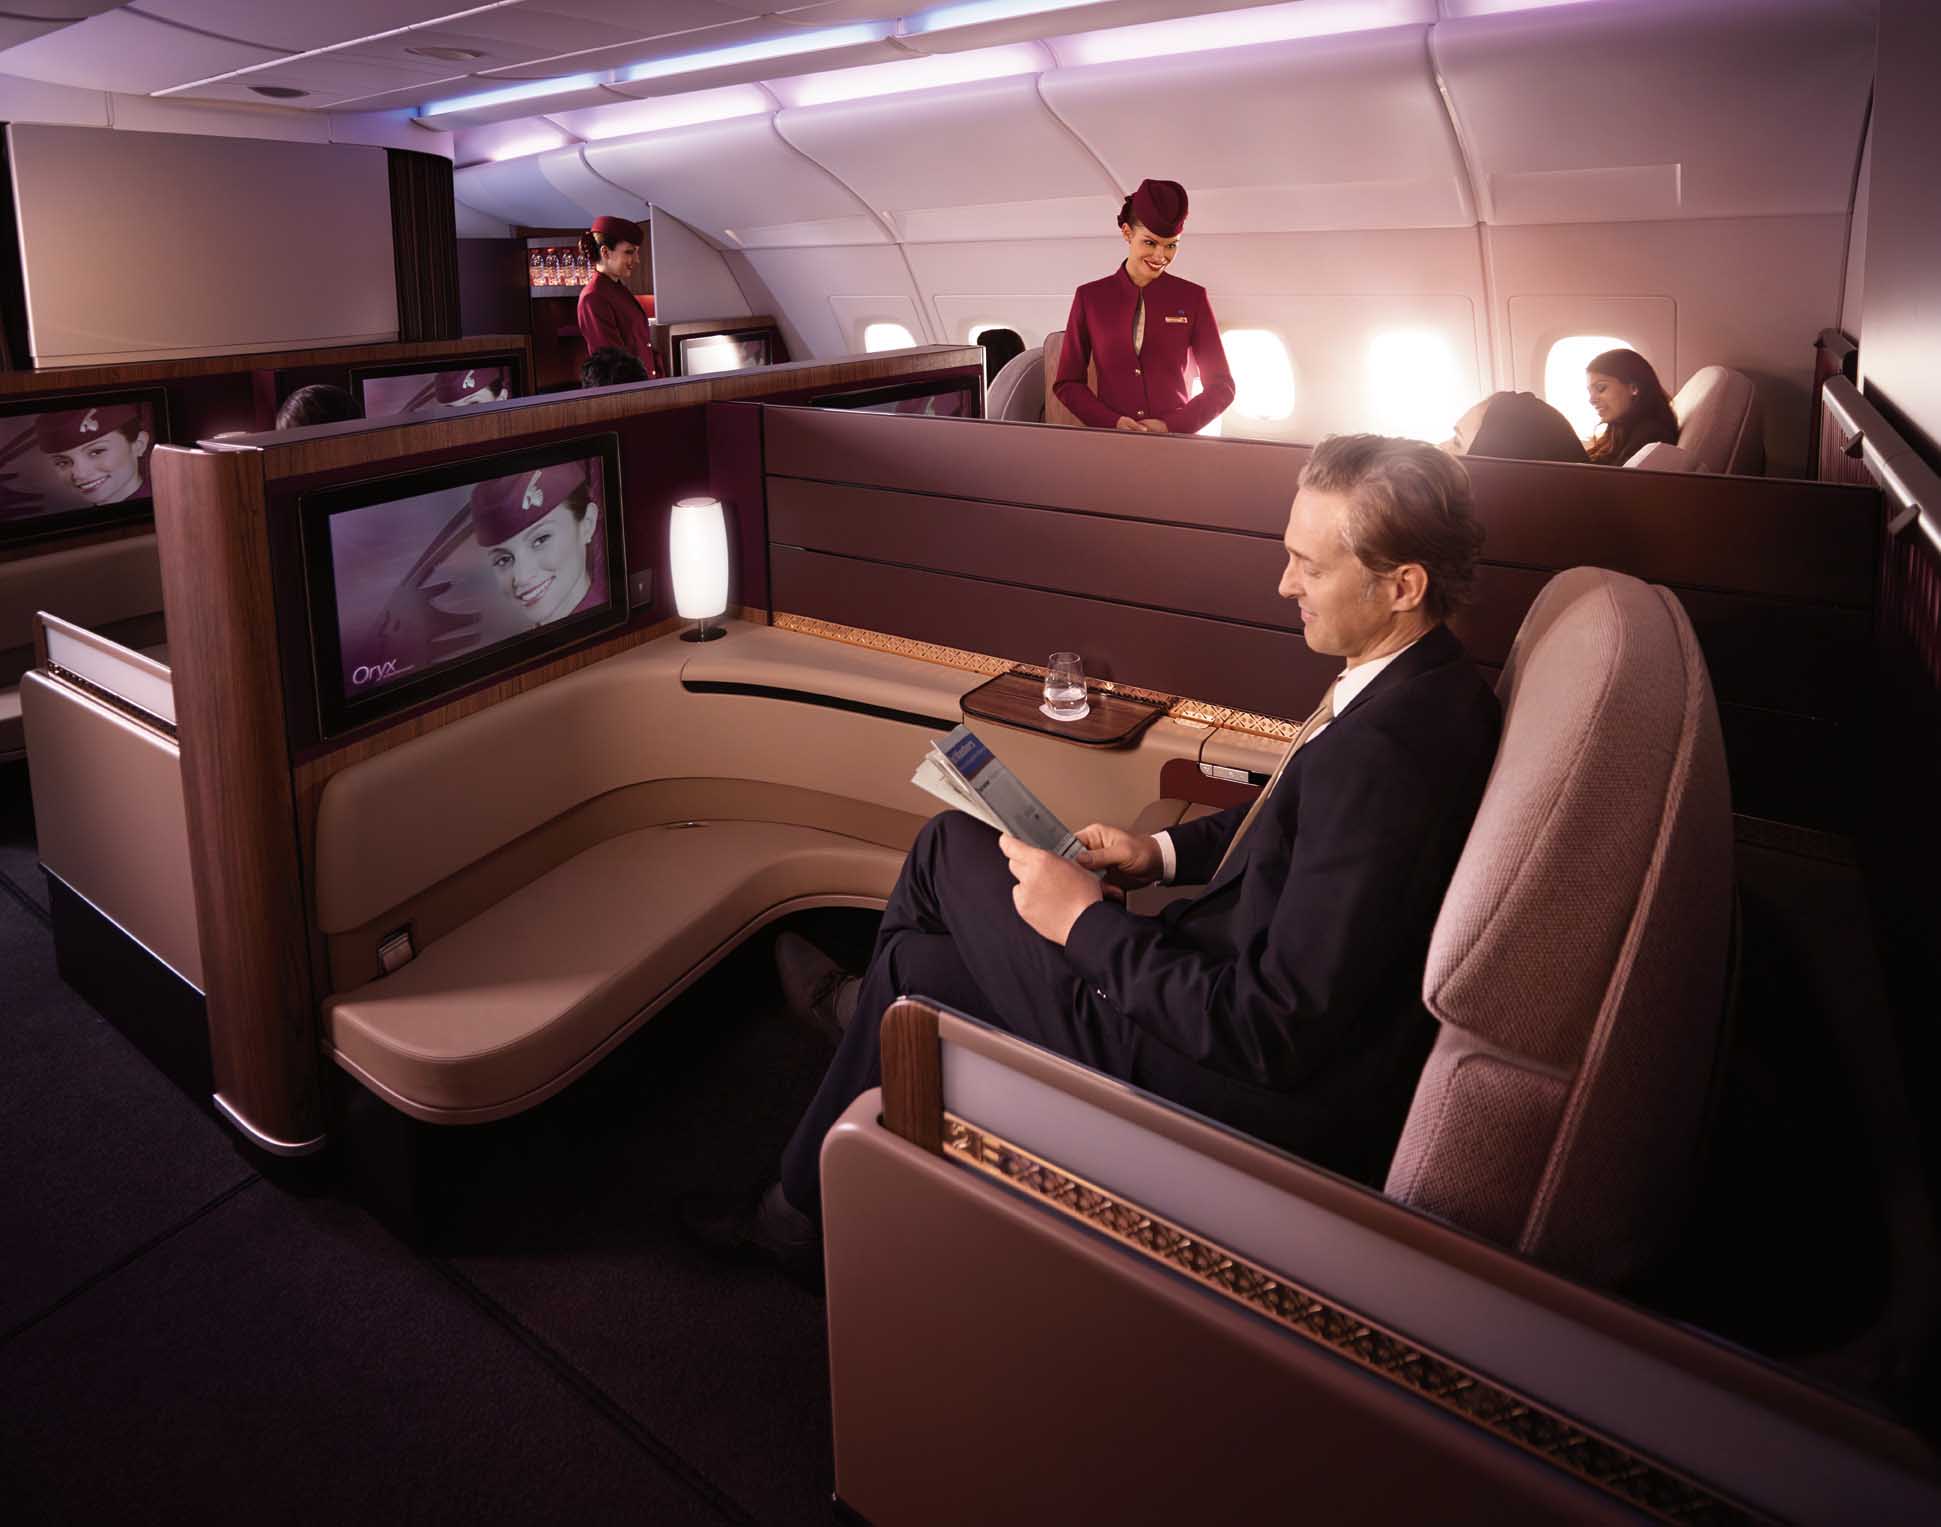 Бизнес класс б. Airbus a380 Qatar Airways первый класс. A380 Qatar Airways первый класс. Airbus a380 бизнес Джет. Катар Эйрвейз первый класс.